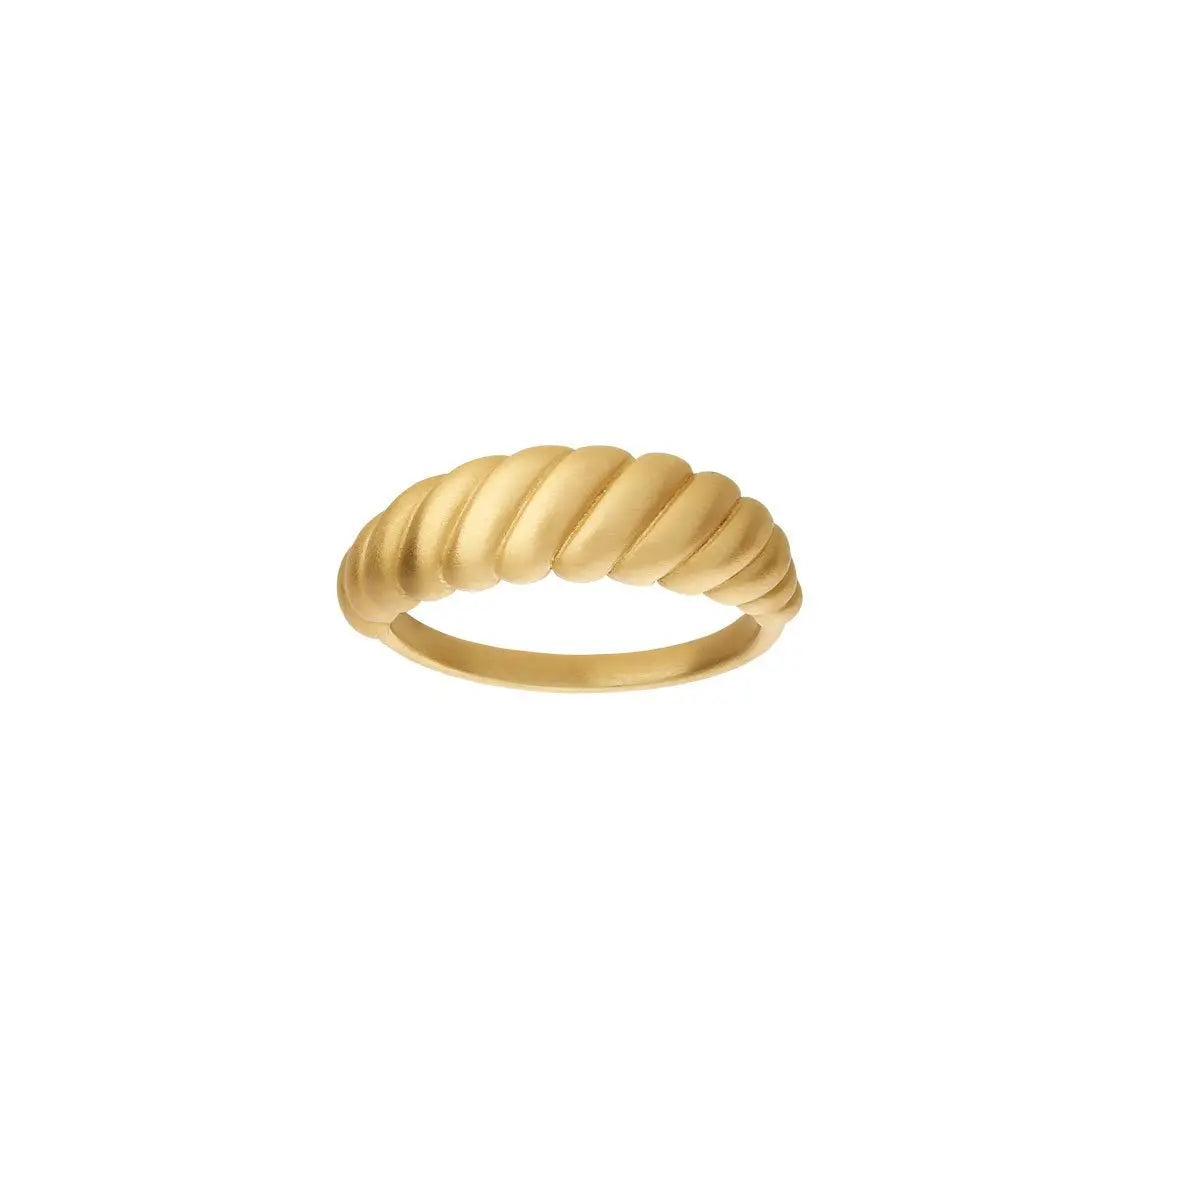 Seashell ring - Forgyldt fra Bybiehl